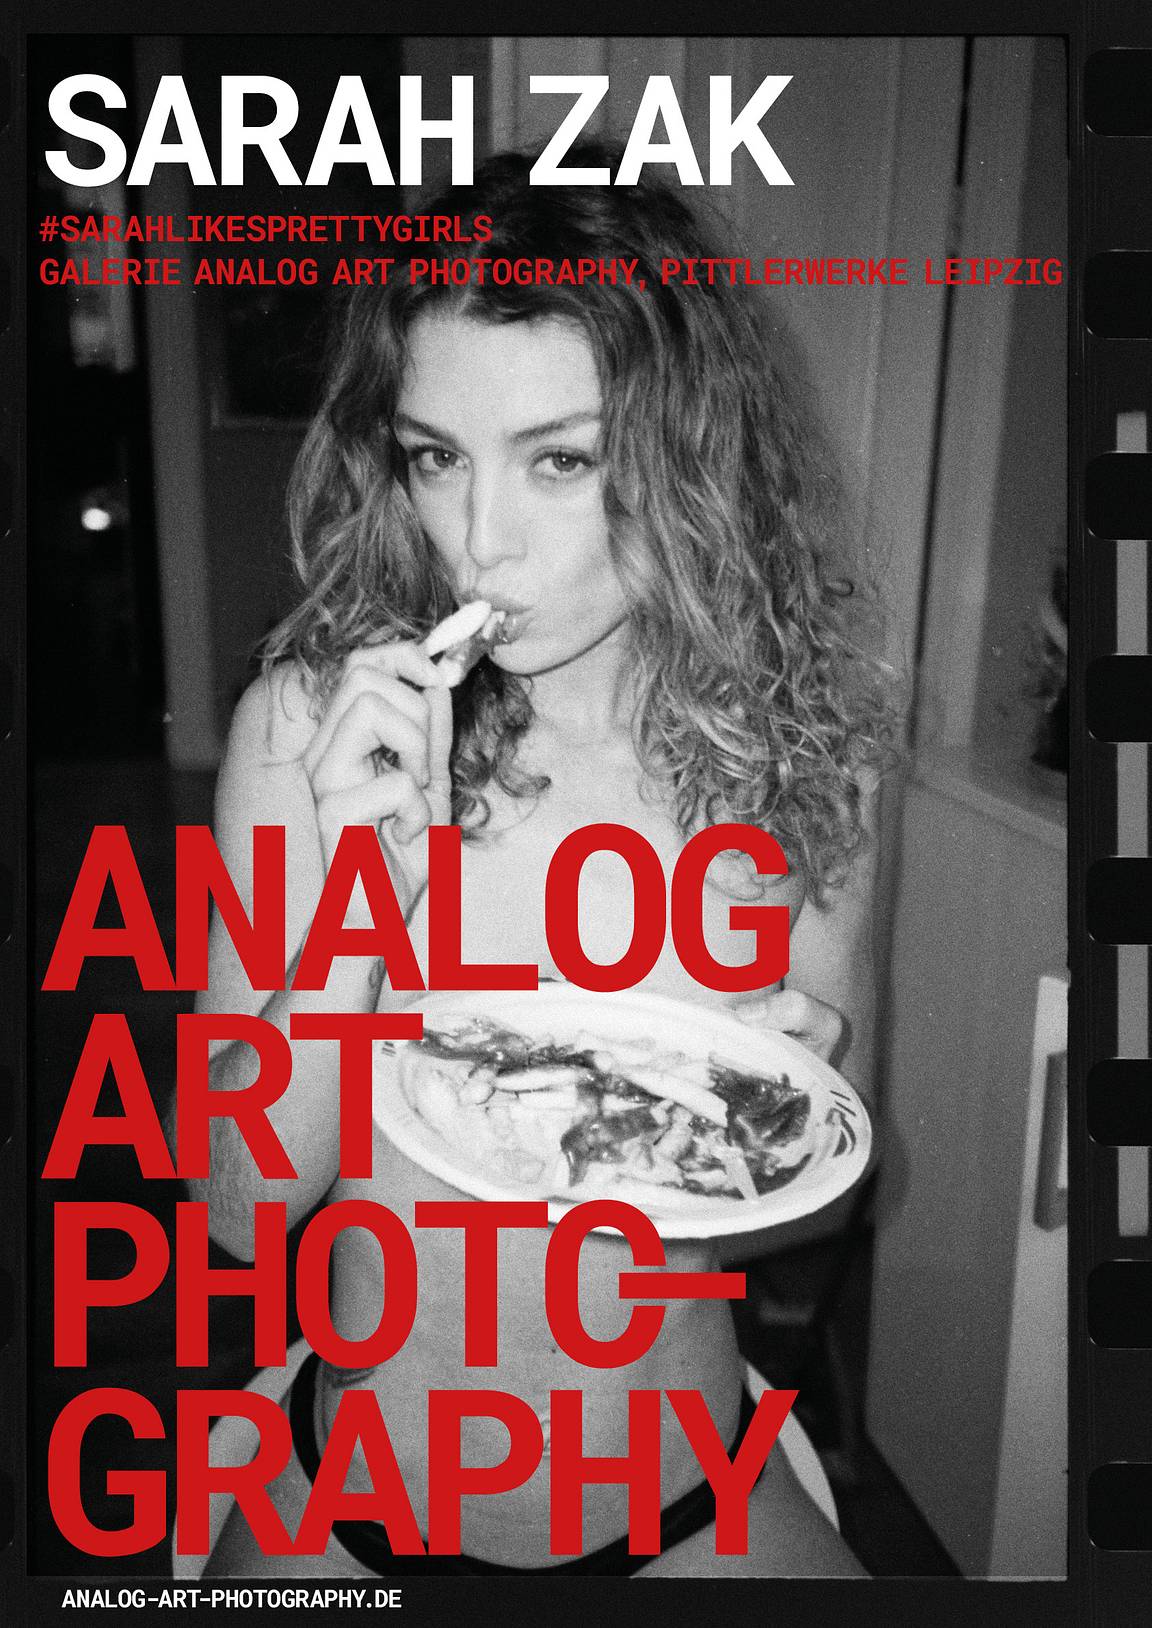 First Analogue Photo Gallery Opens at Leipzig Pittlerwerke